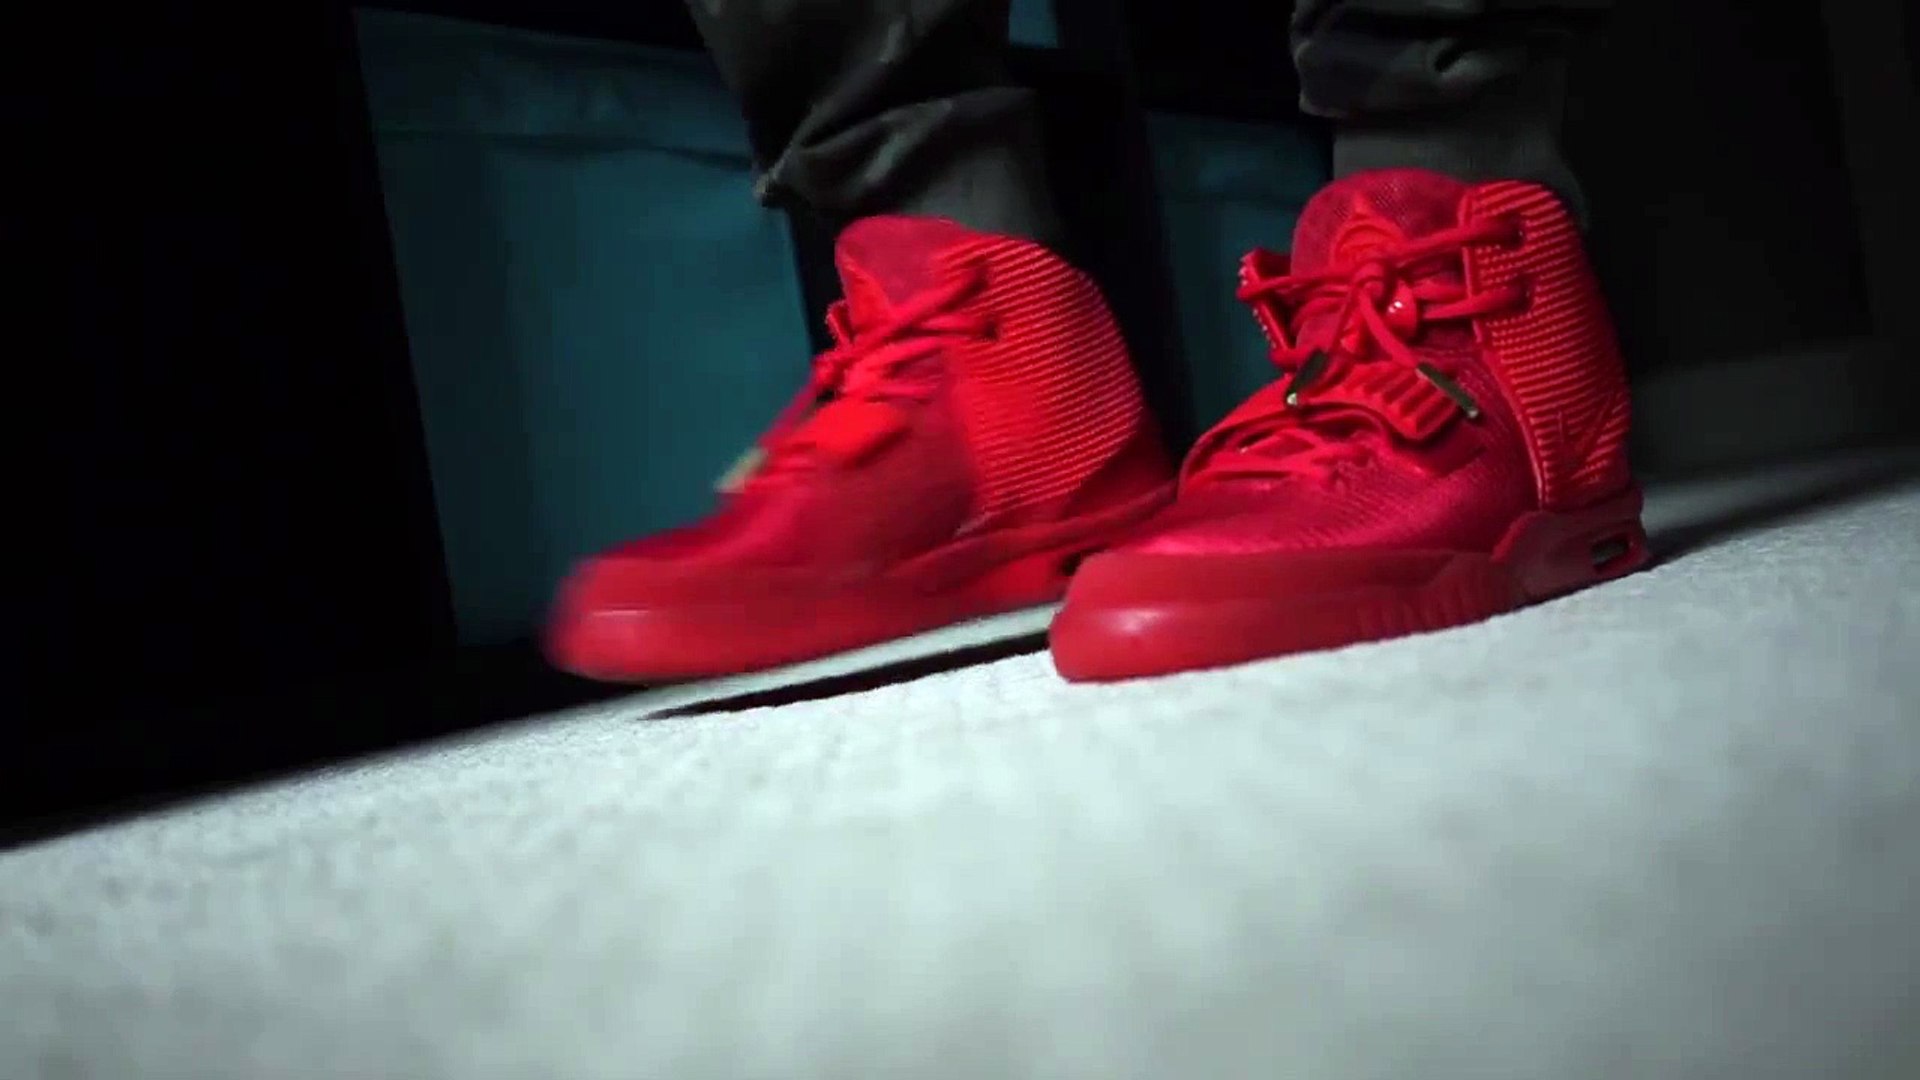 Nike Yeezy 2 Red October Replica Feet - video